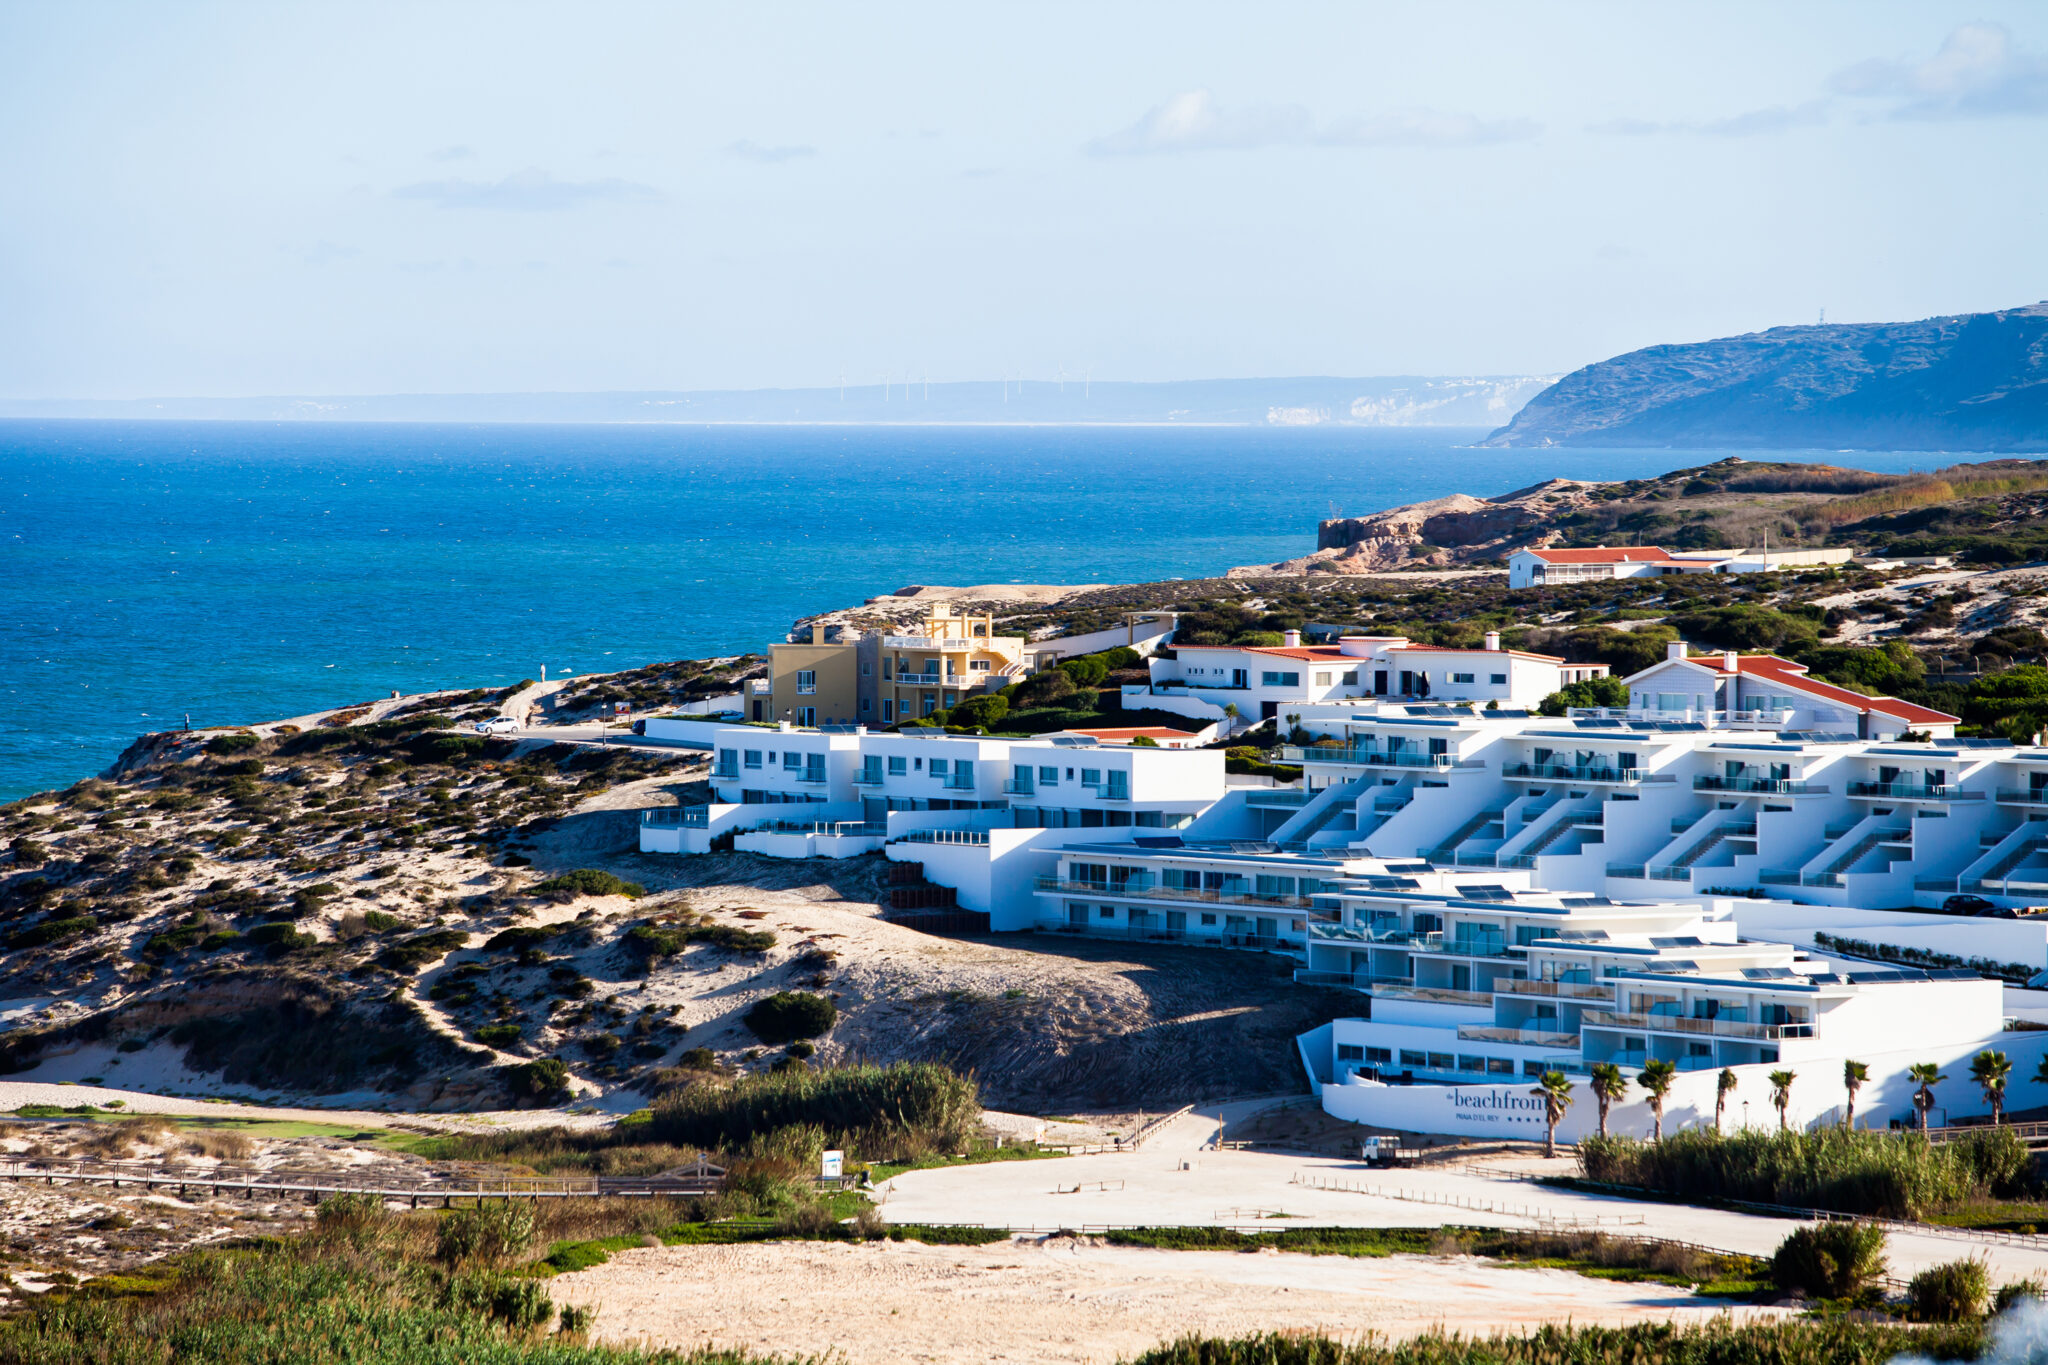 Aerial view of Praia D'el Rey Golf & Beach Resort and surrounding area